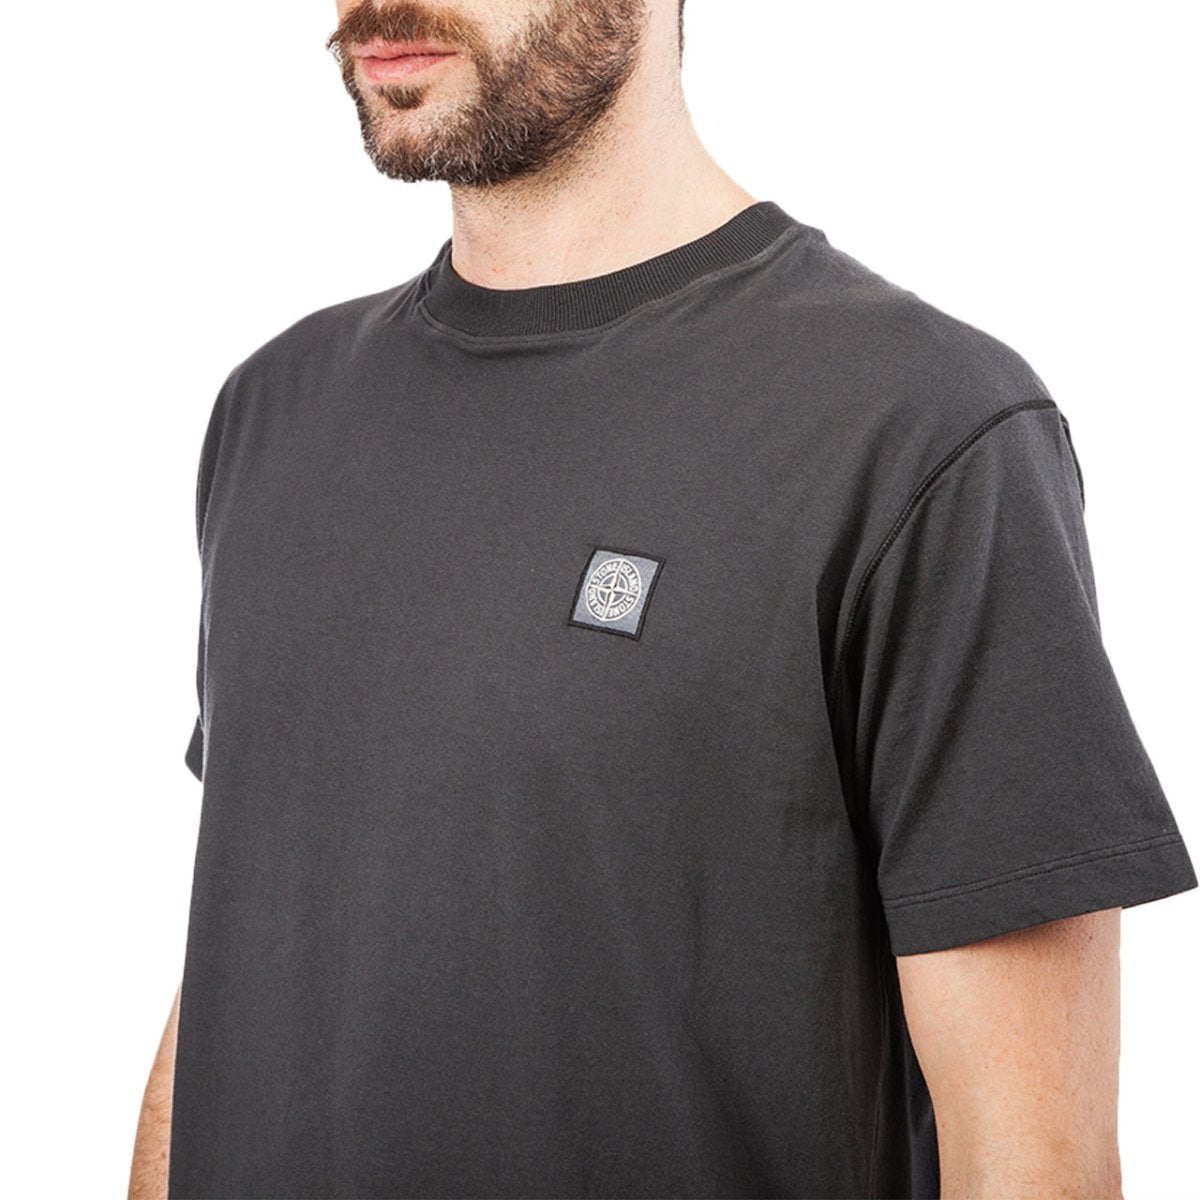 Stone Island Garment Dyed Jersey T-Shirt (Dunkelgrau)  - Allike Store